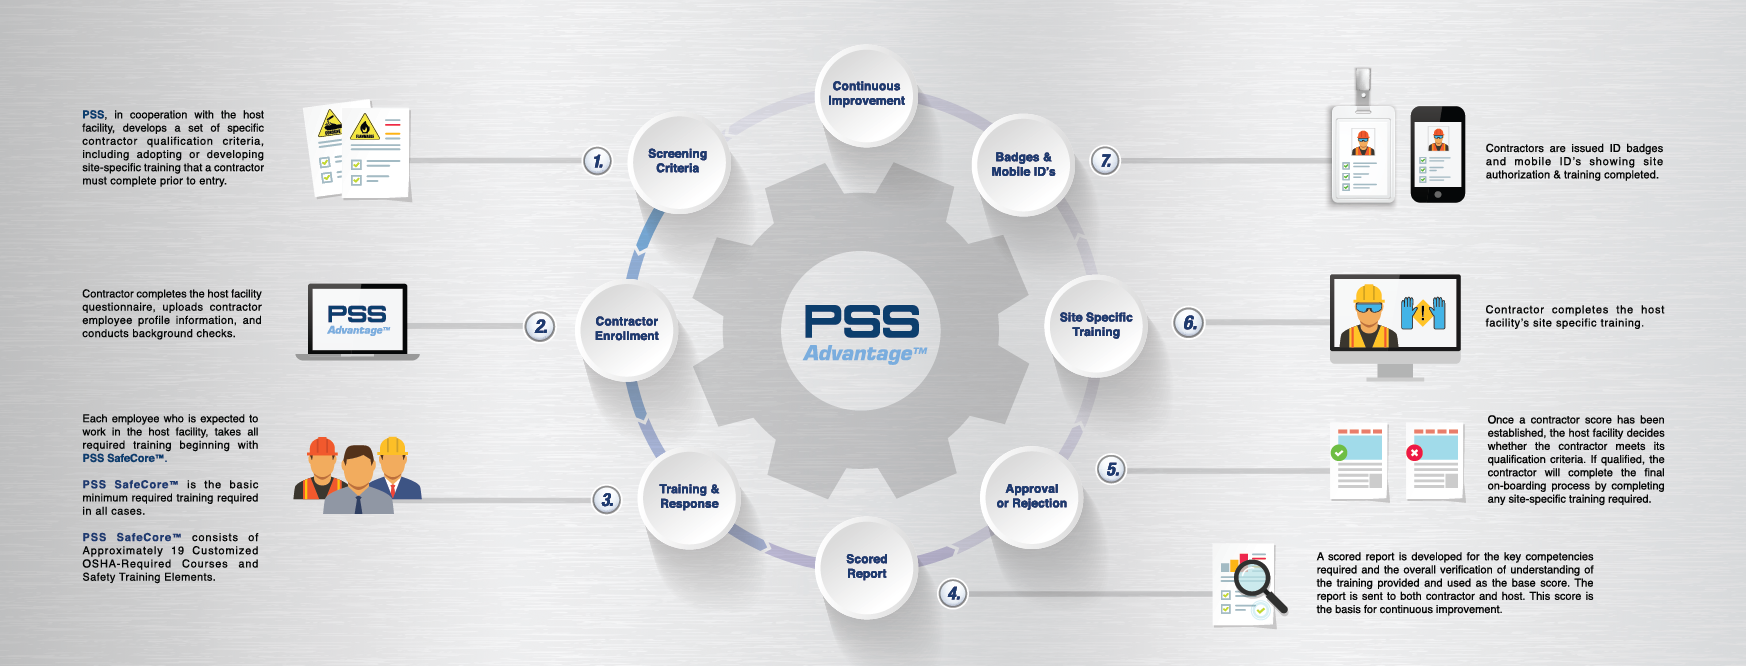 PSS Advantage Flow Chart_5_Artboard 1 copy.png